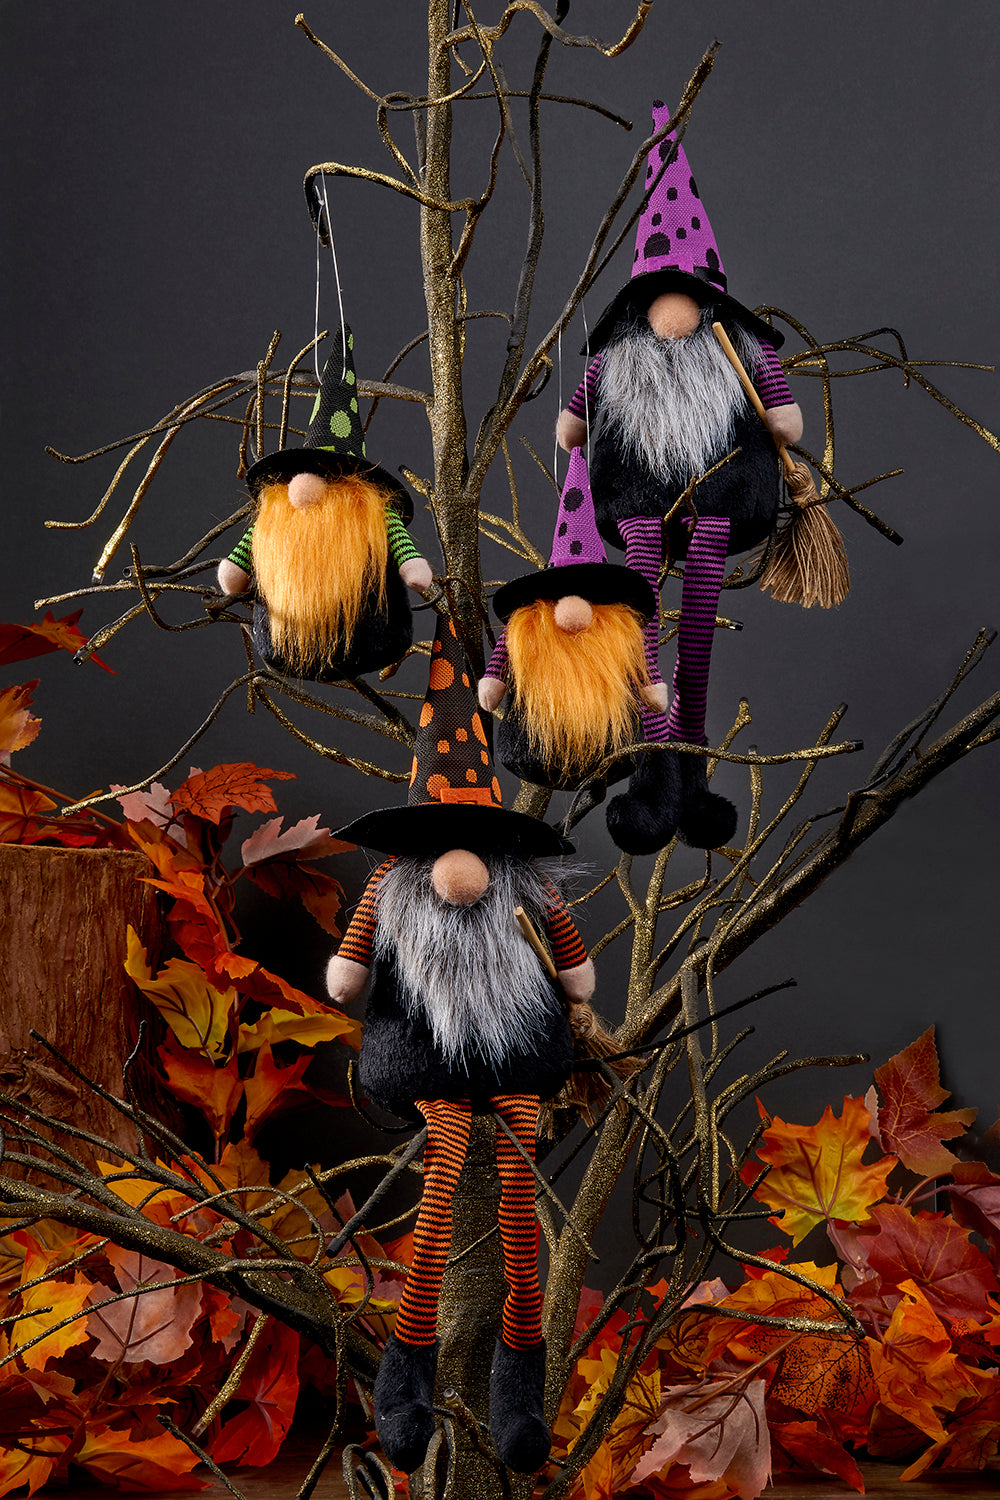 Autumn Witch Gonk … Stumpy sitter / hanger … 2 colours